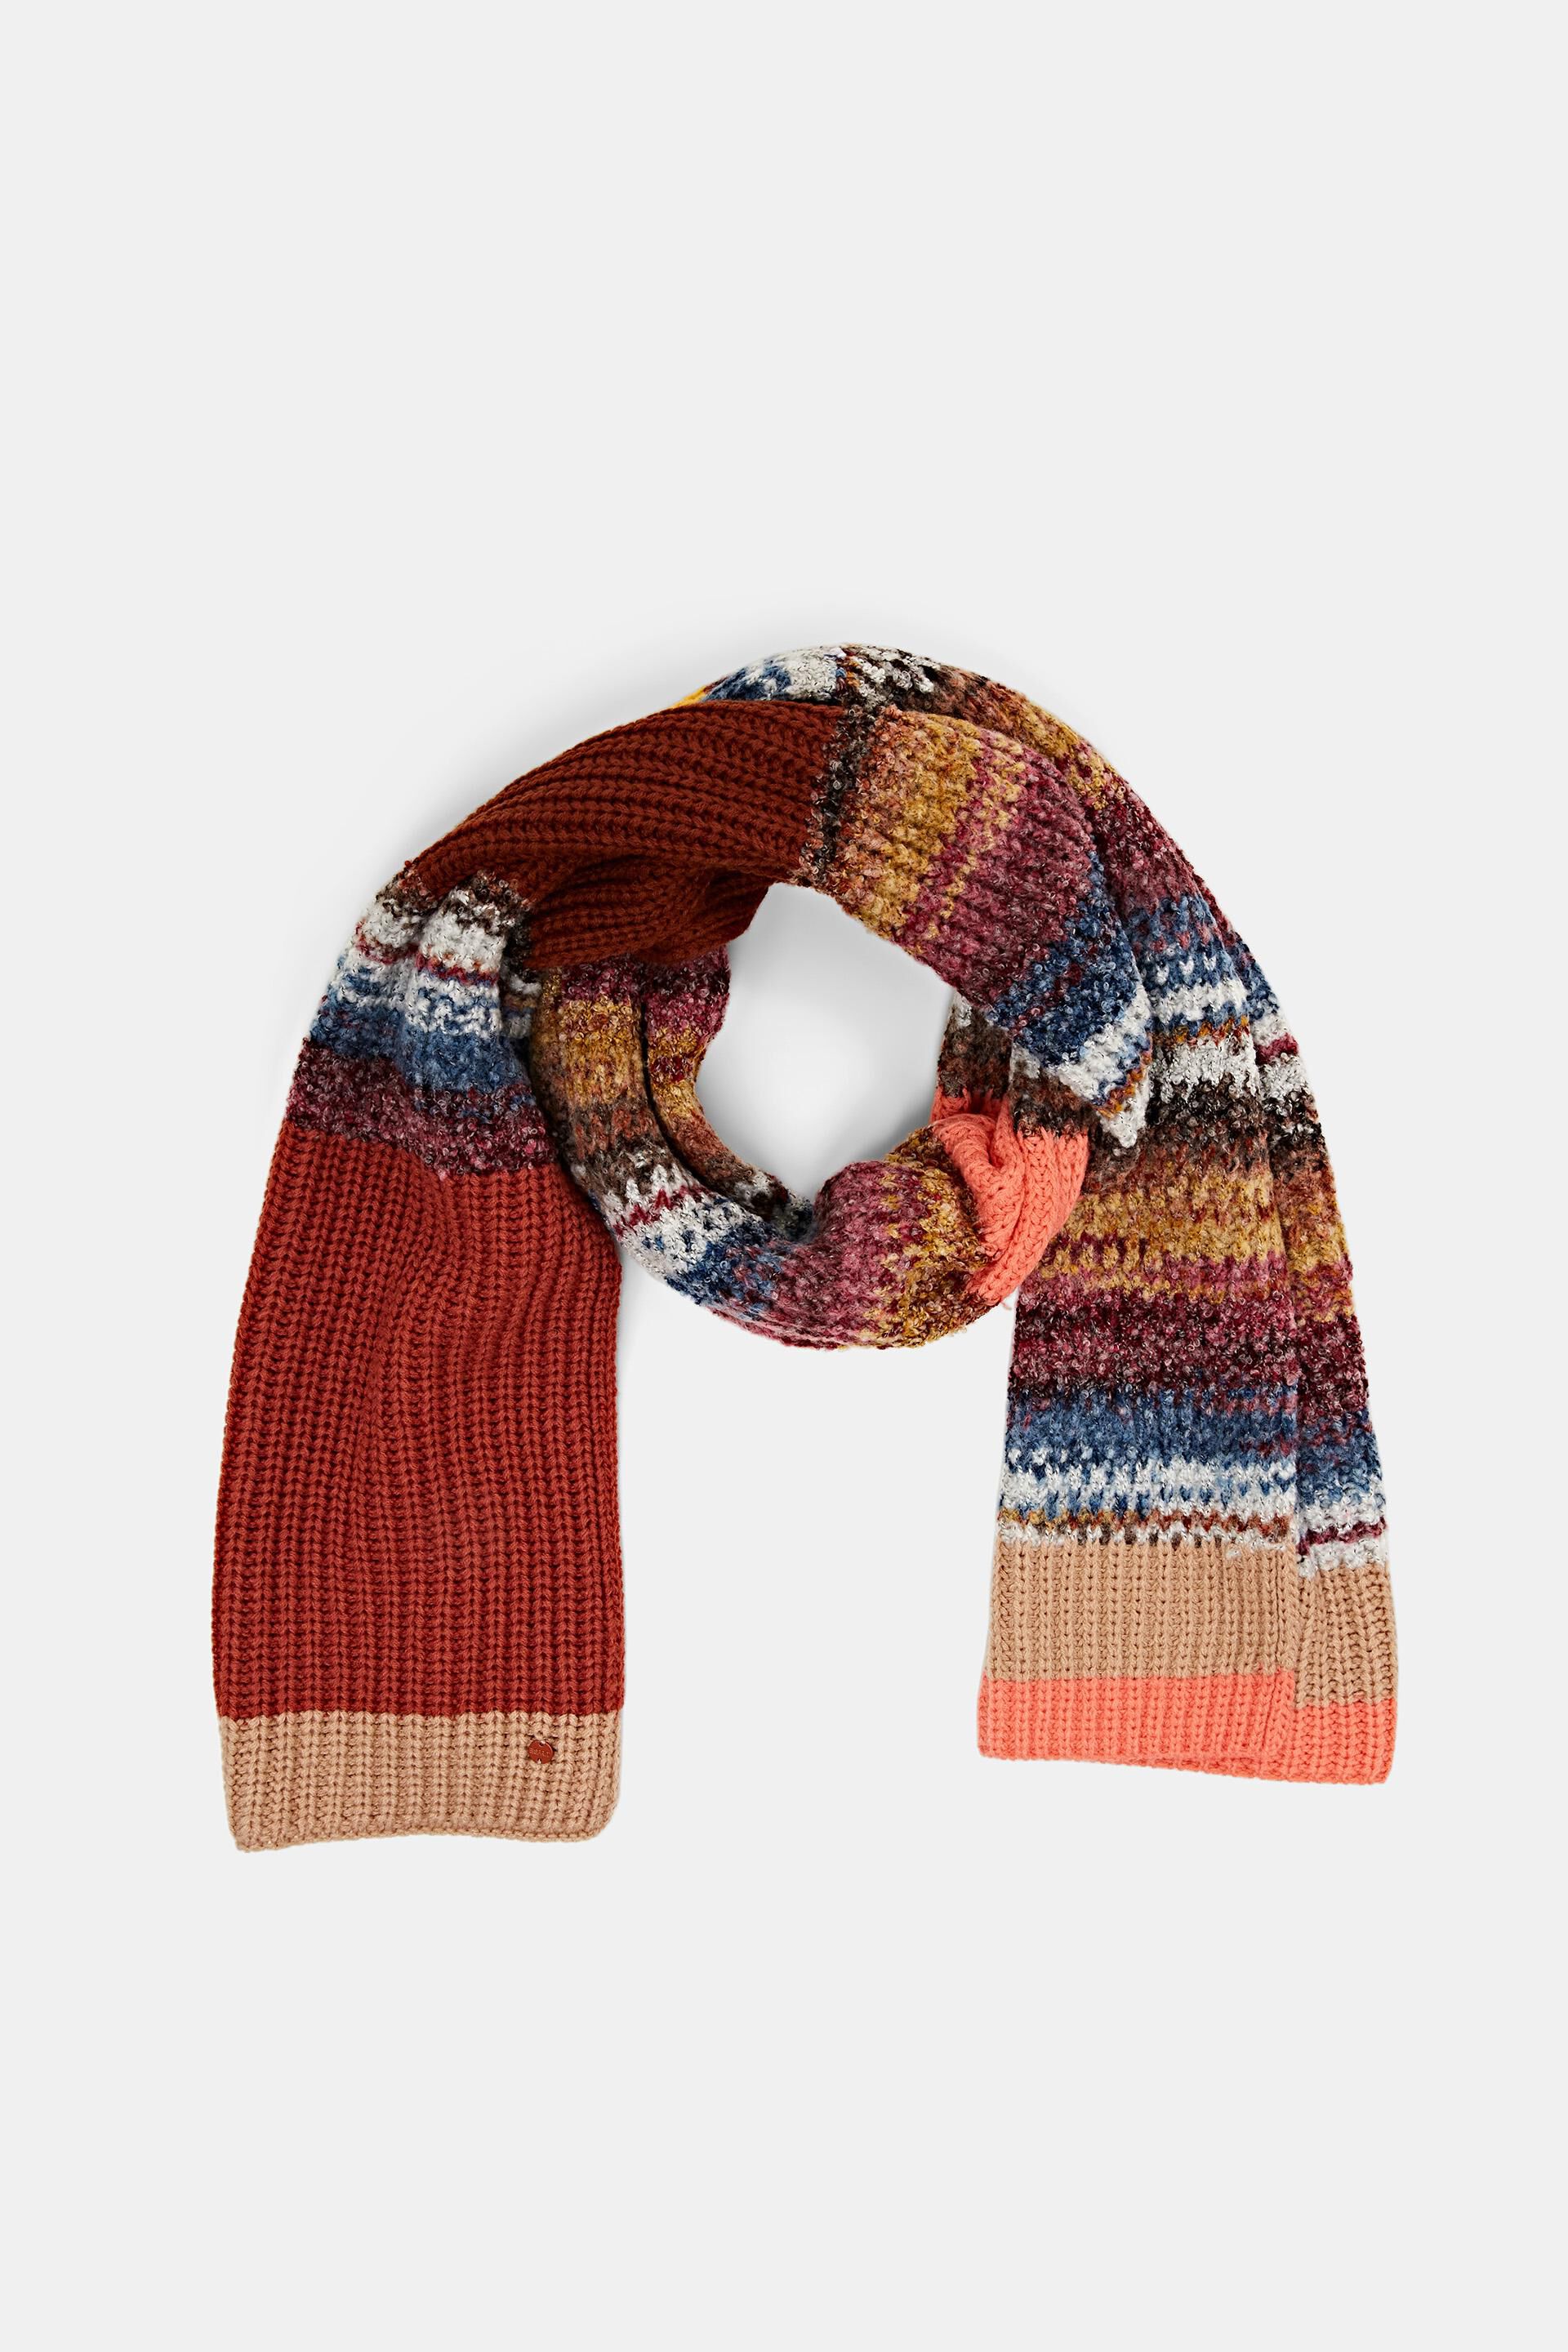 Esprit Online Store Multi-coloured knit scarf, wool blend